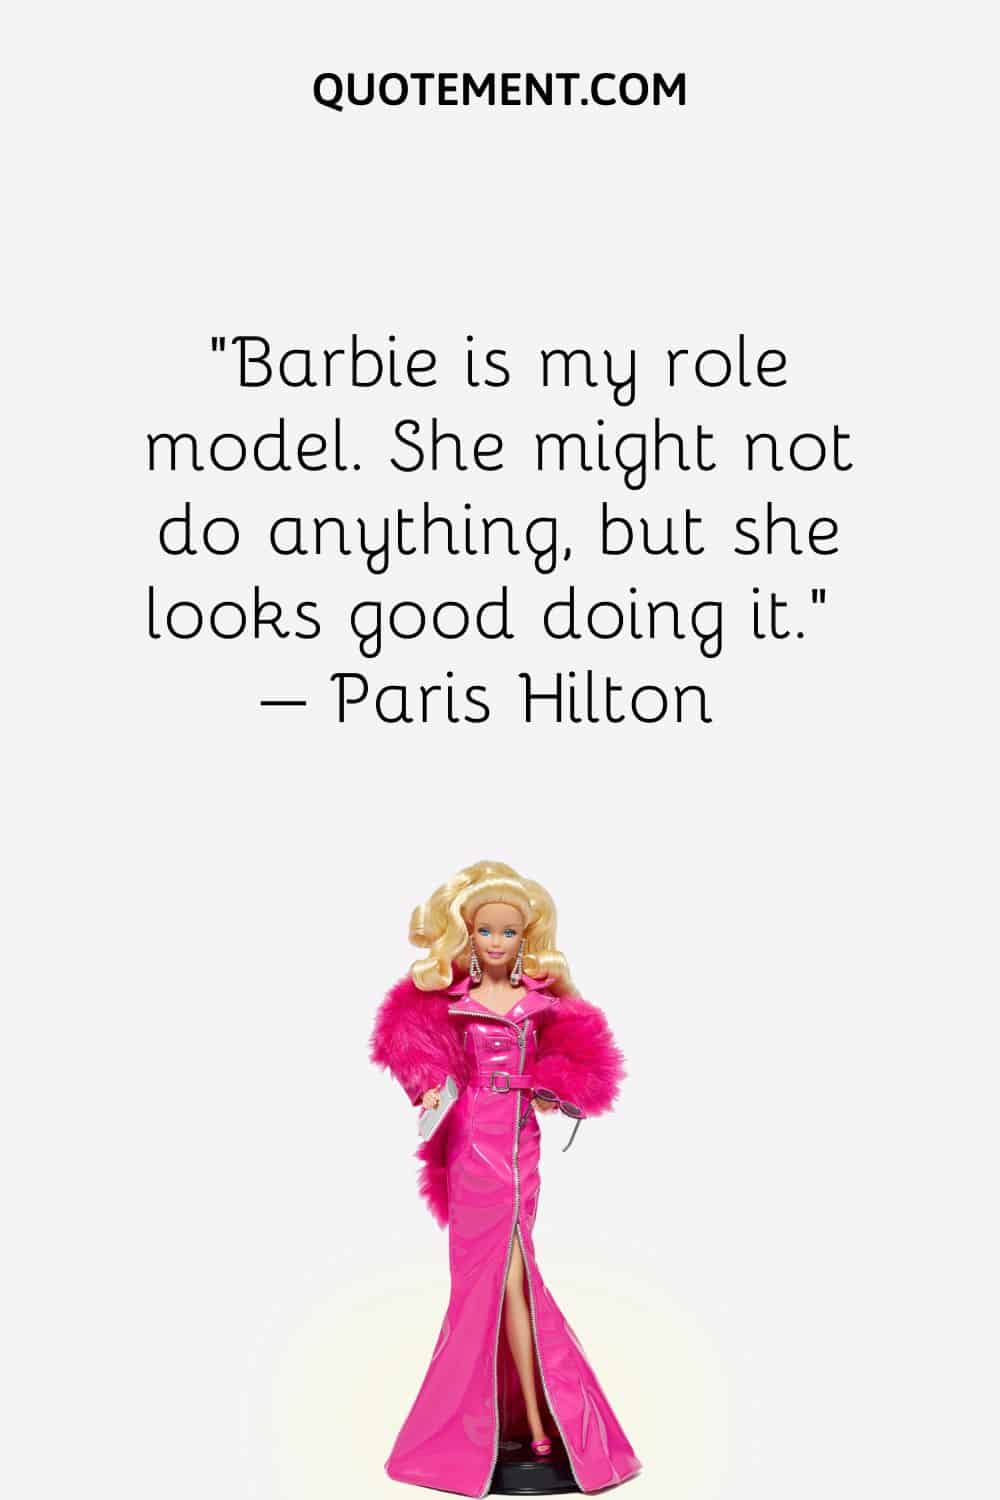 Barbie is my role model